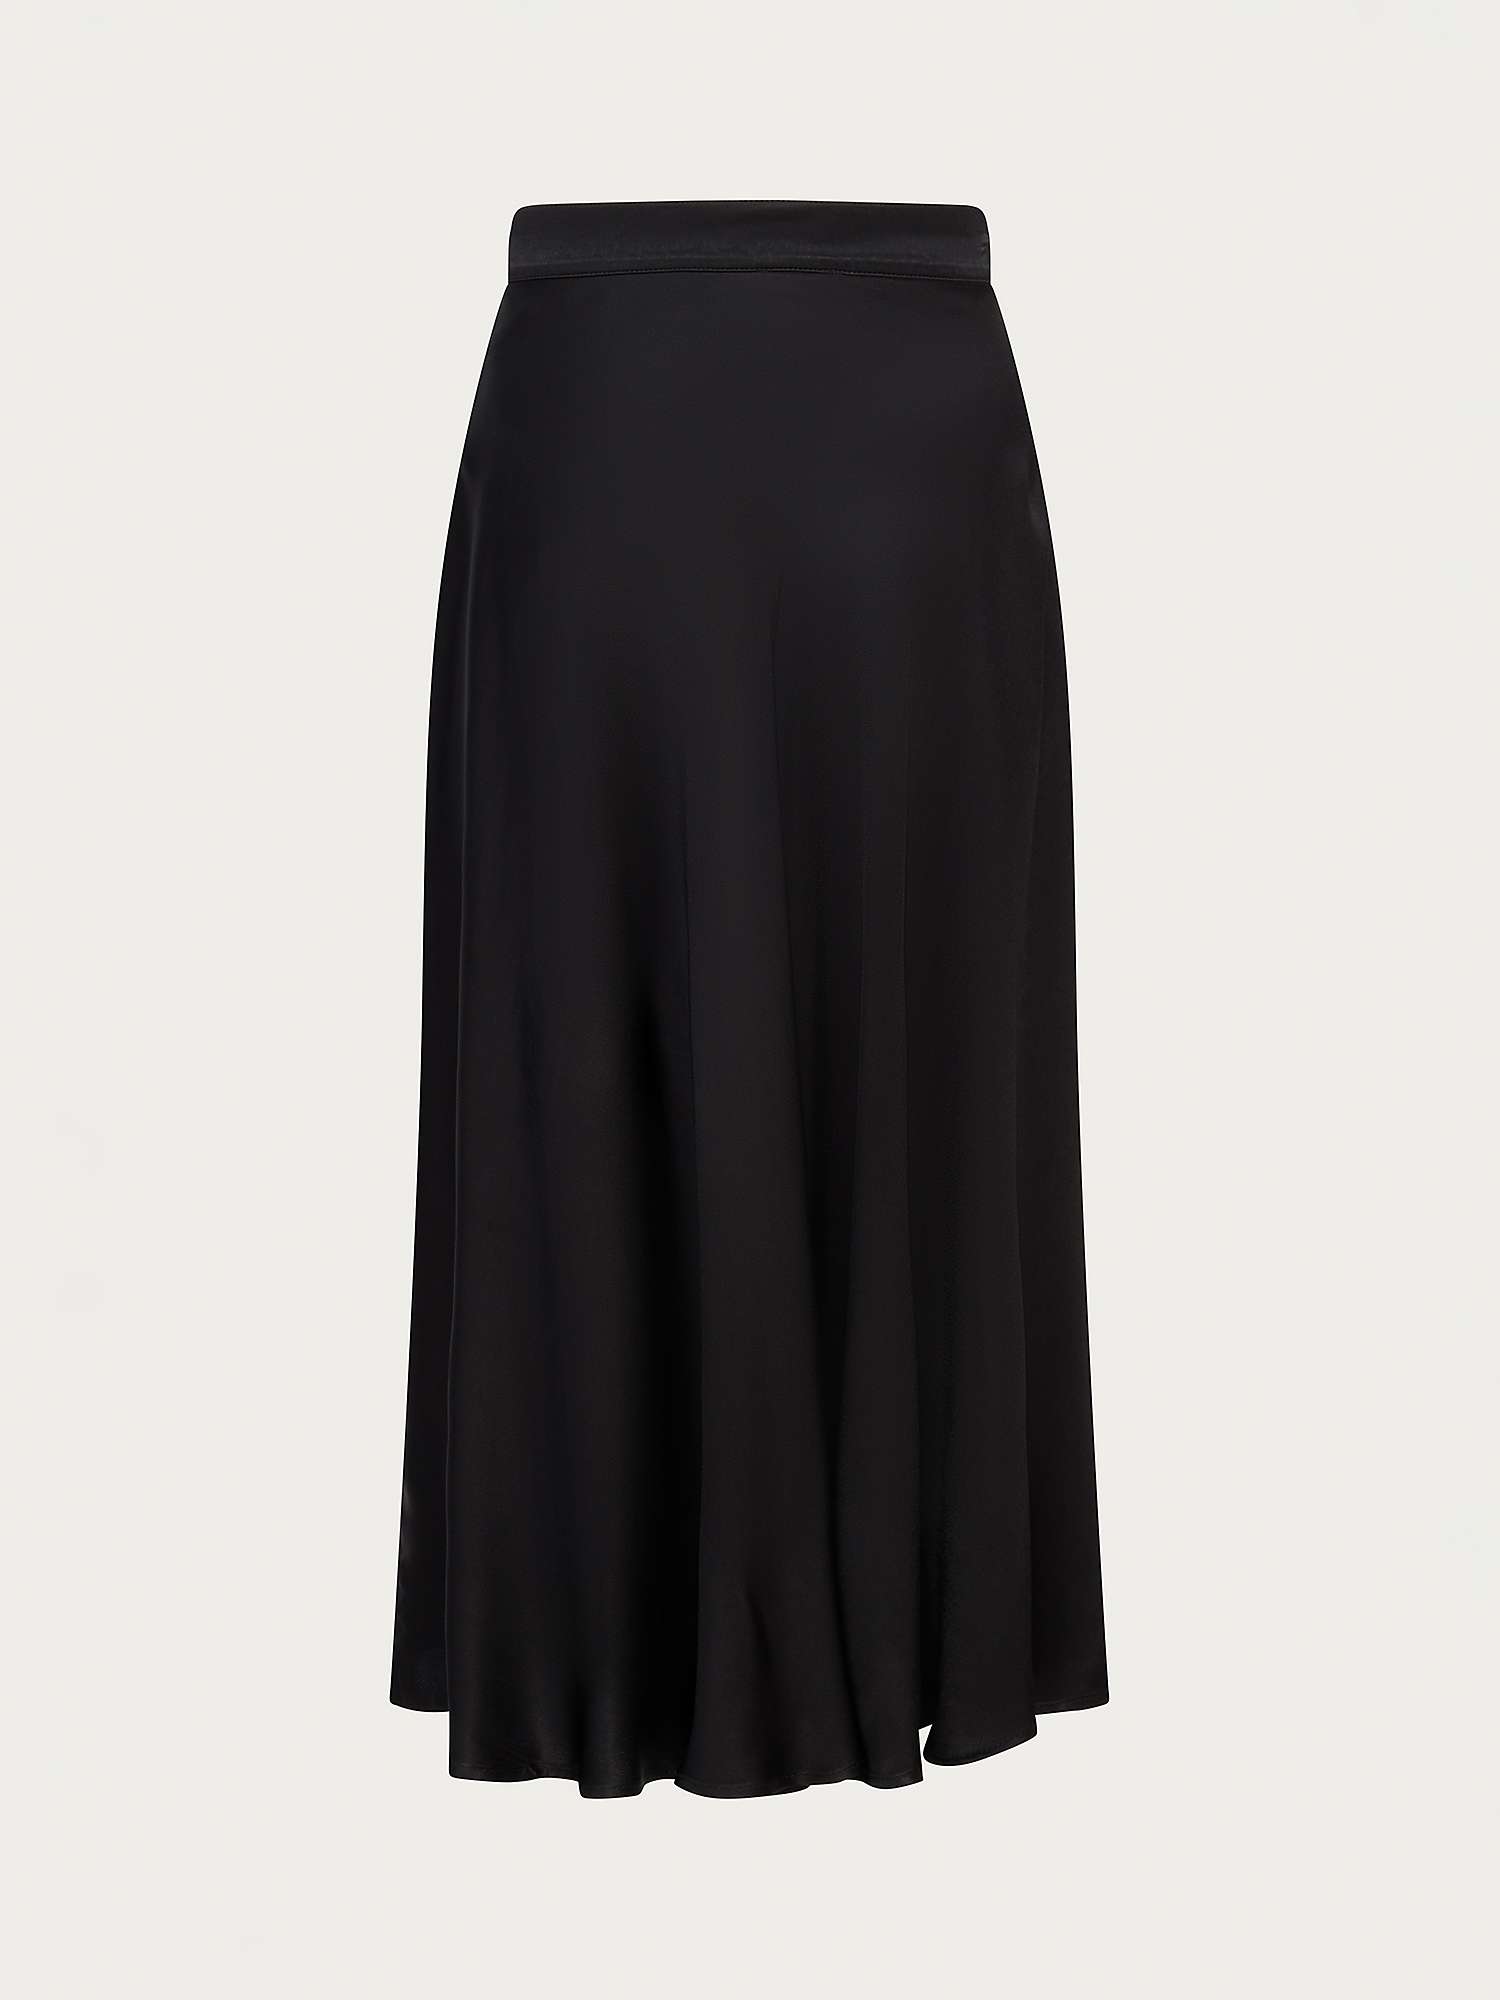 Ghost Eva Satin Midi Button Skirt, Black at John Lewis & Partners